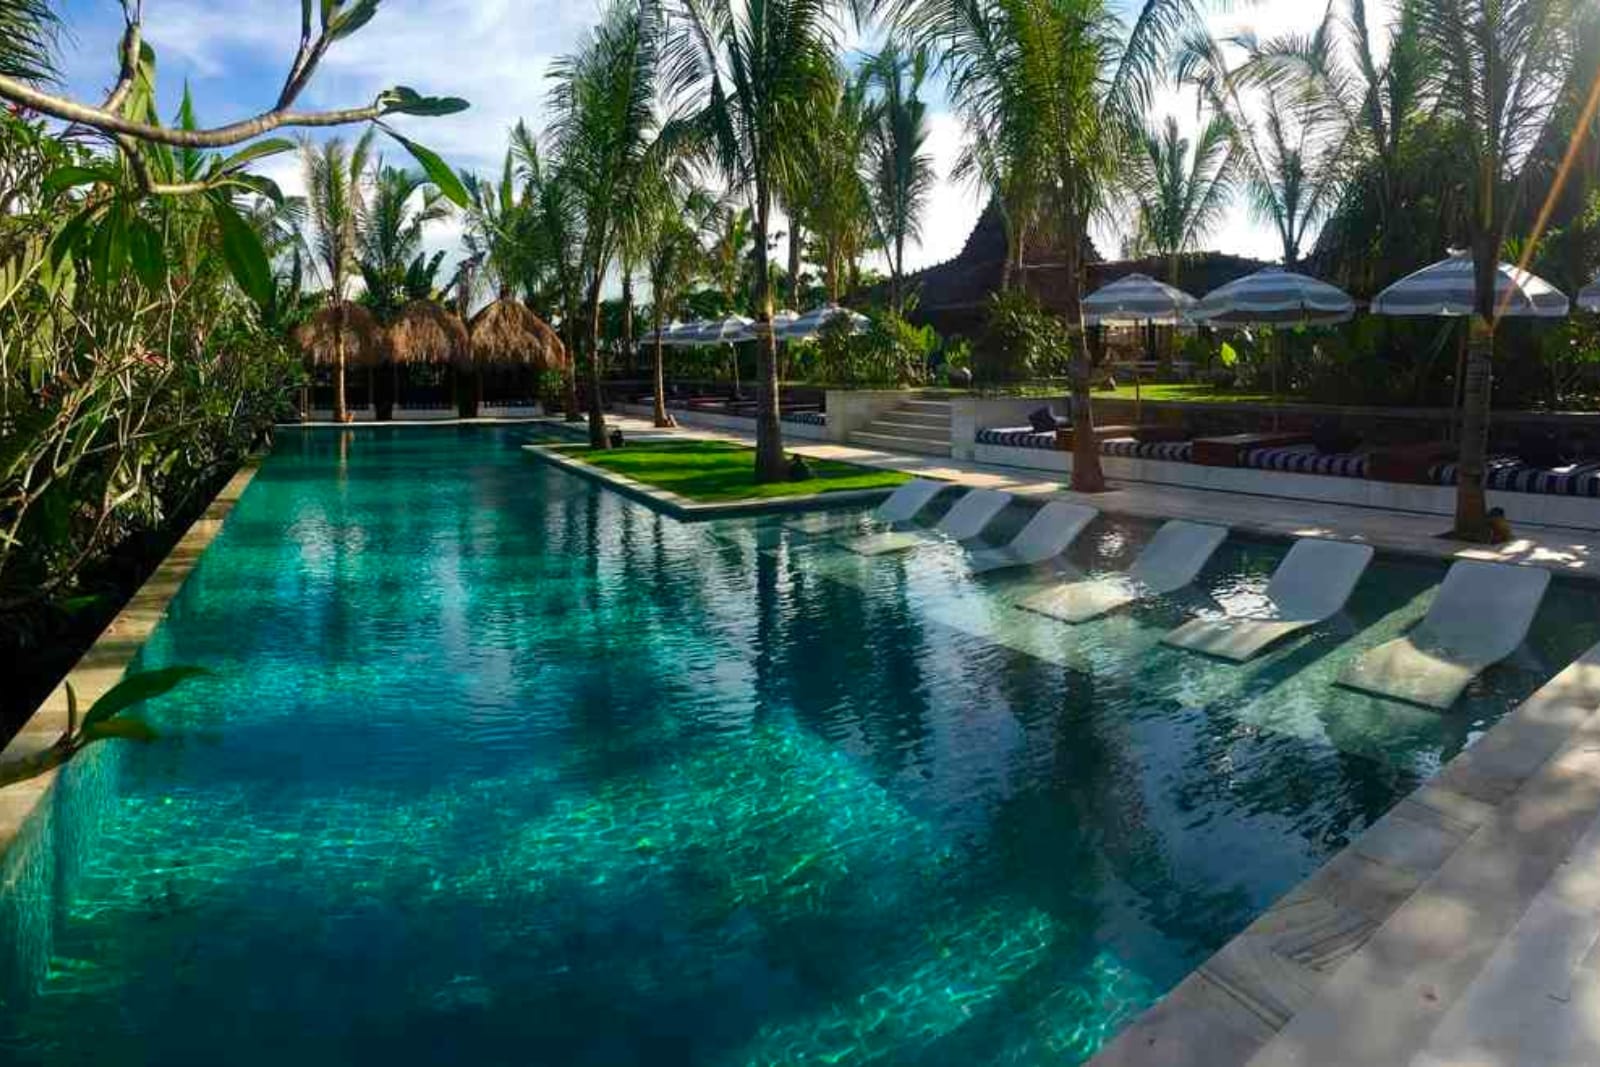 Pool side view of Bali resort 2024